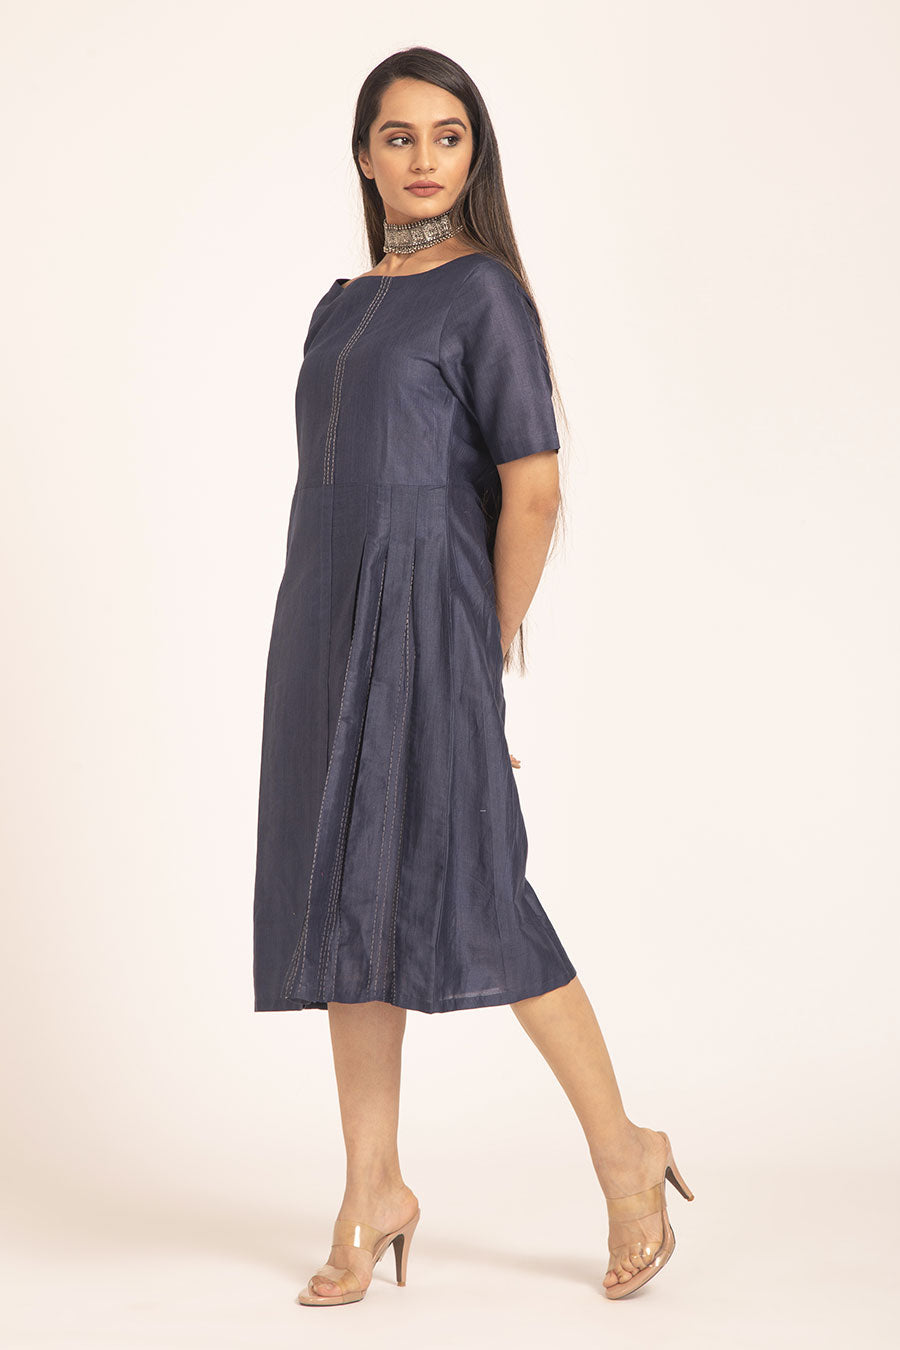 Gloriosa - Blue A-Line Pleated Dress